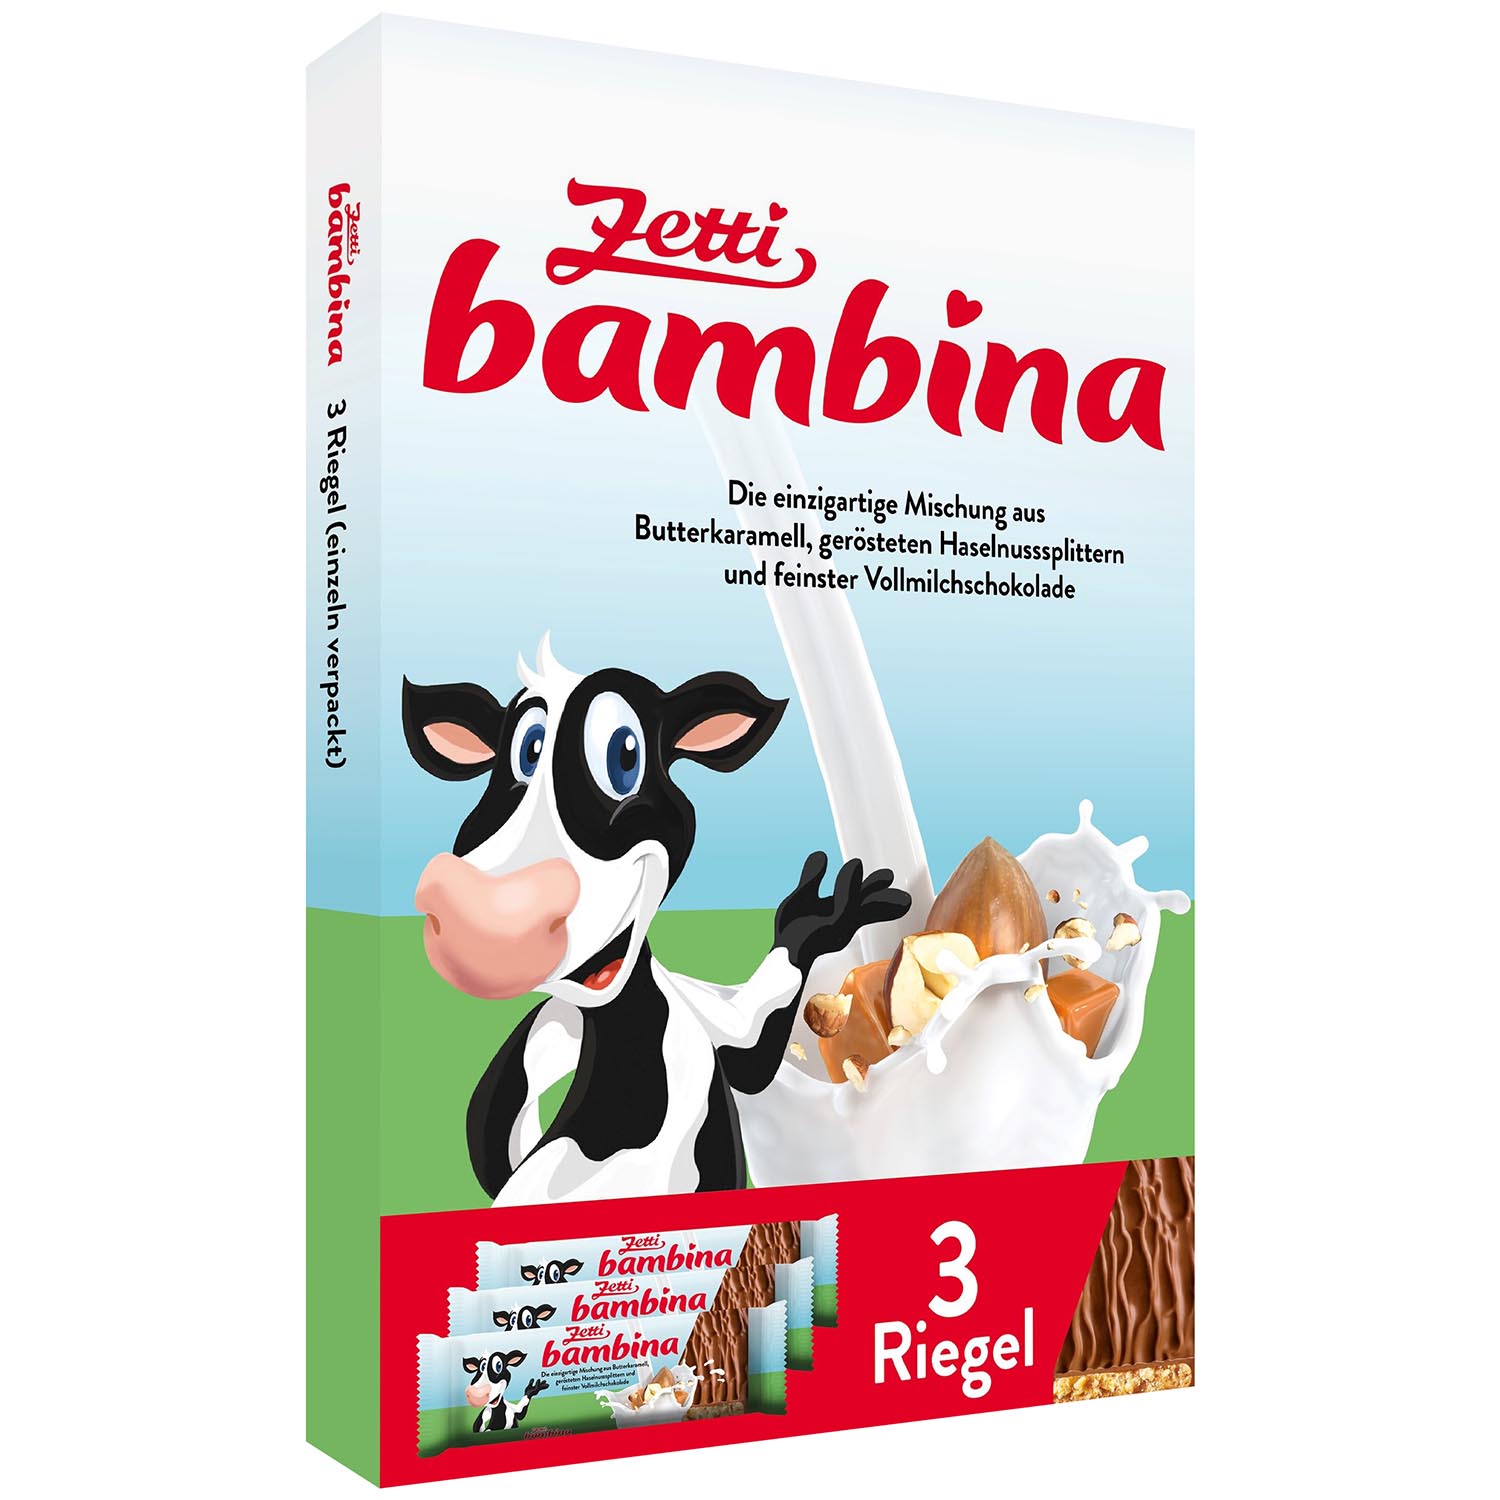 Riegel Geschenkkarte Zetti Bambina 3 leckere Sorten DDR Produkte 